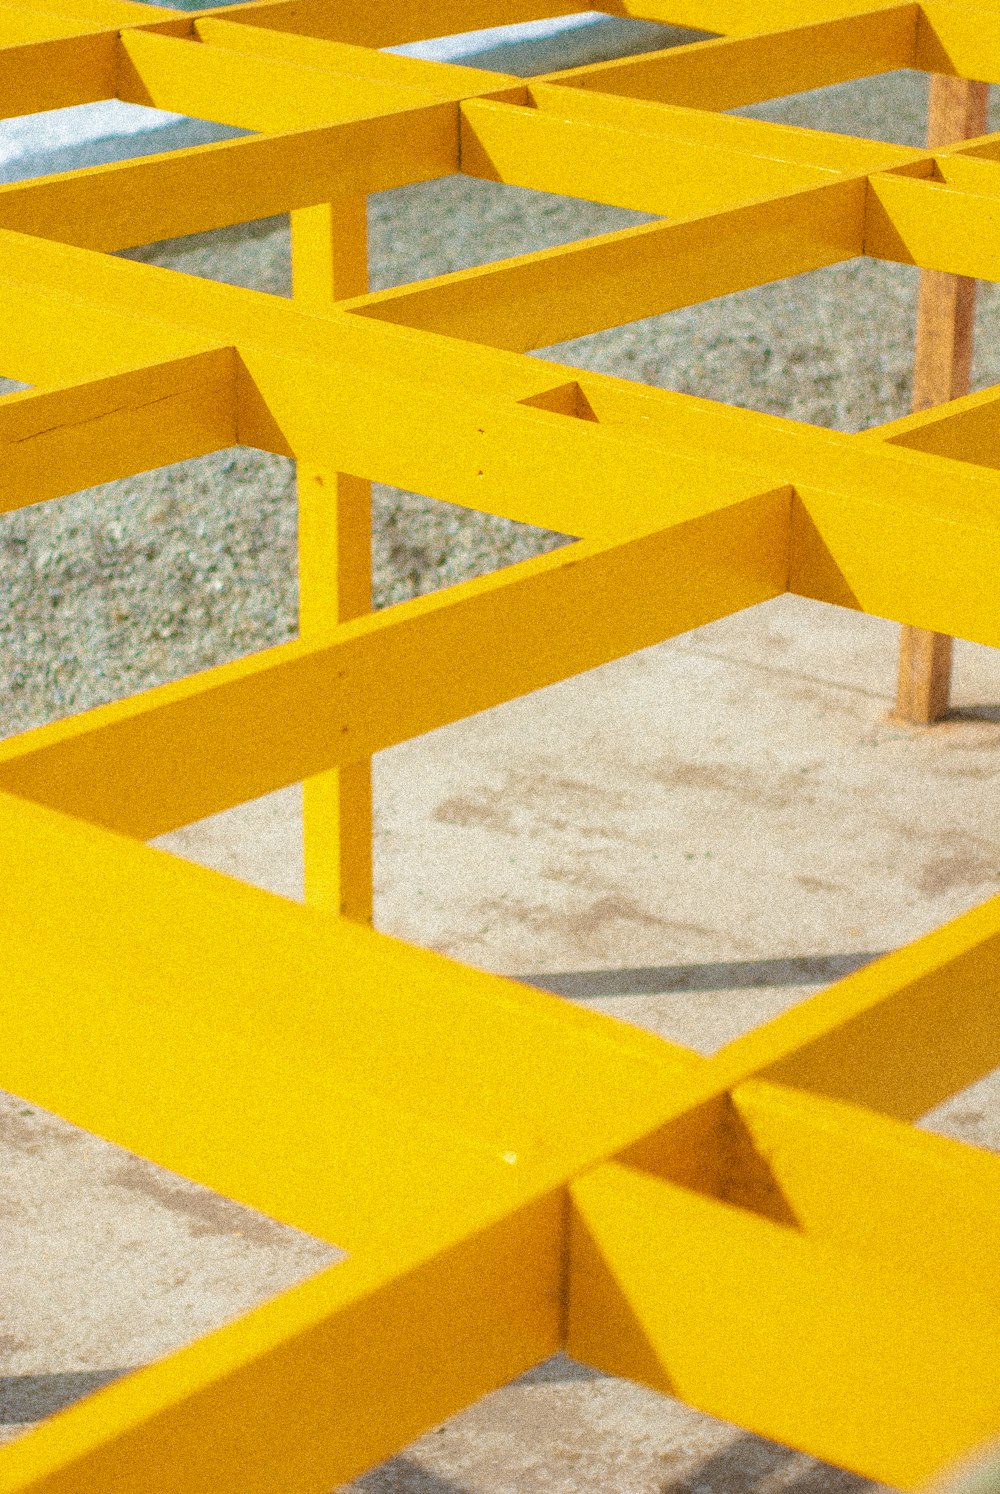 yellow metal railings on white sand during daytime